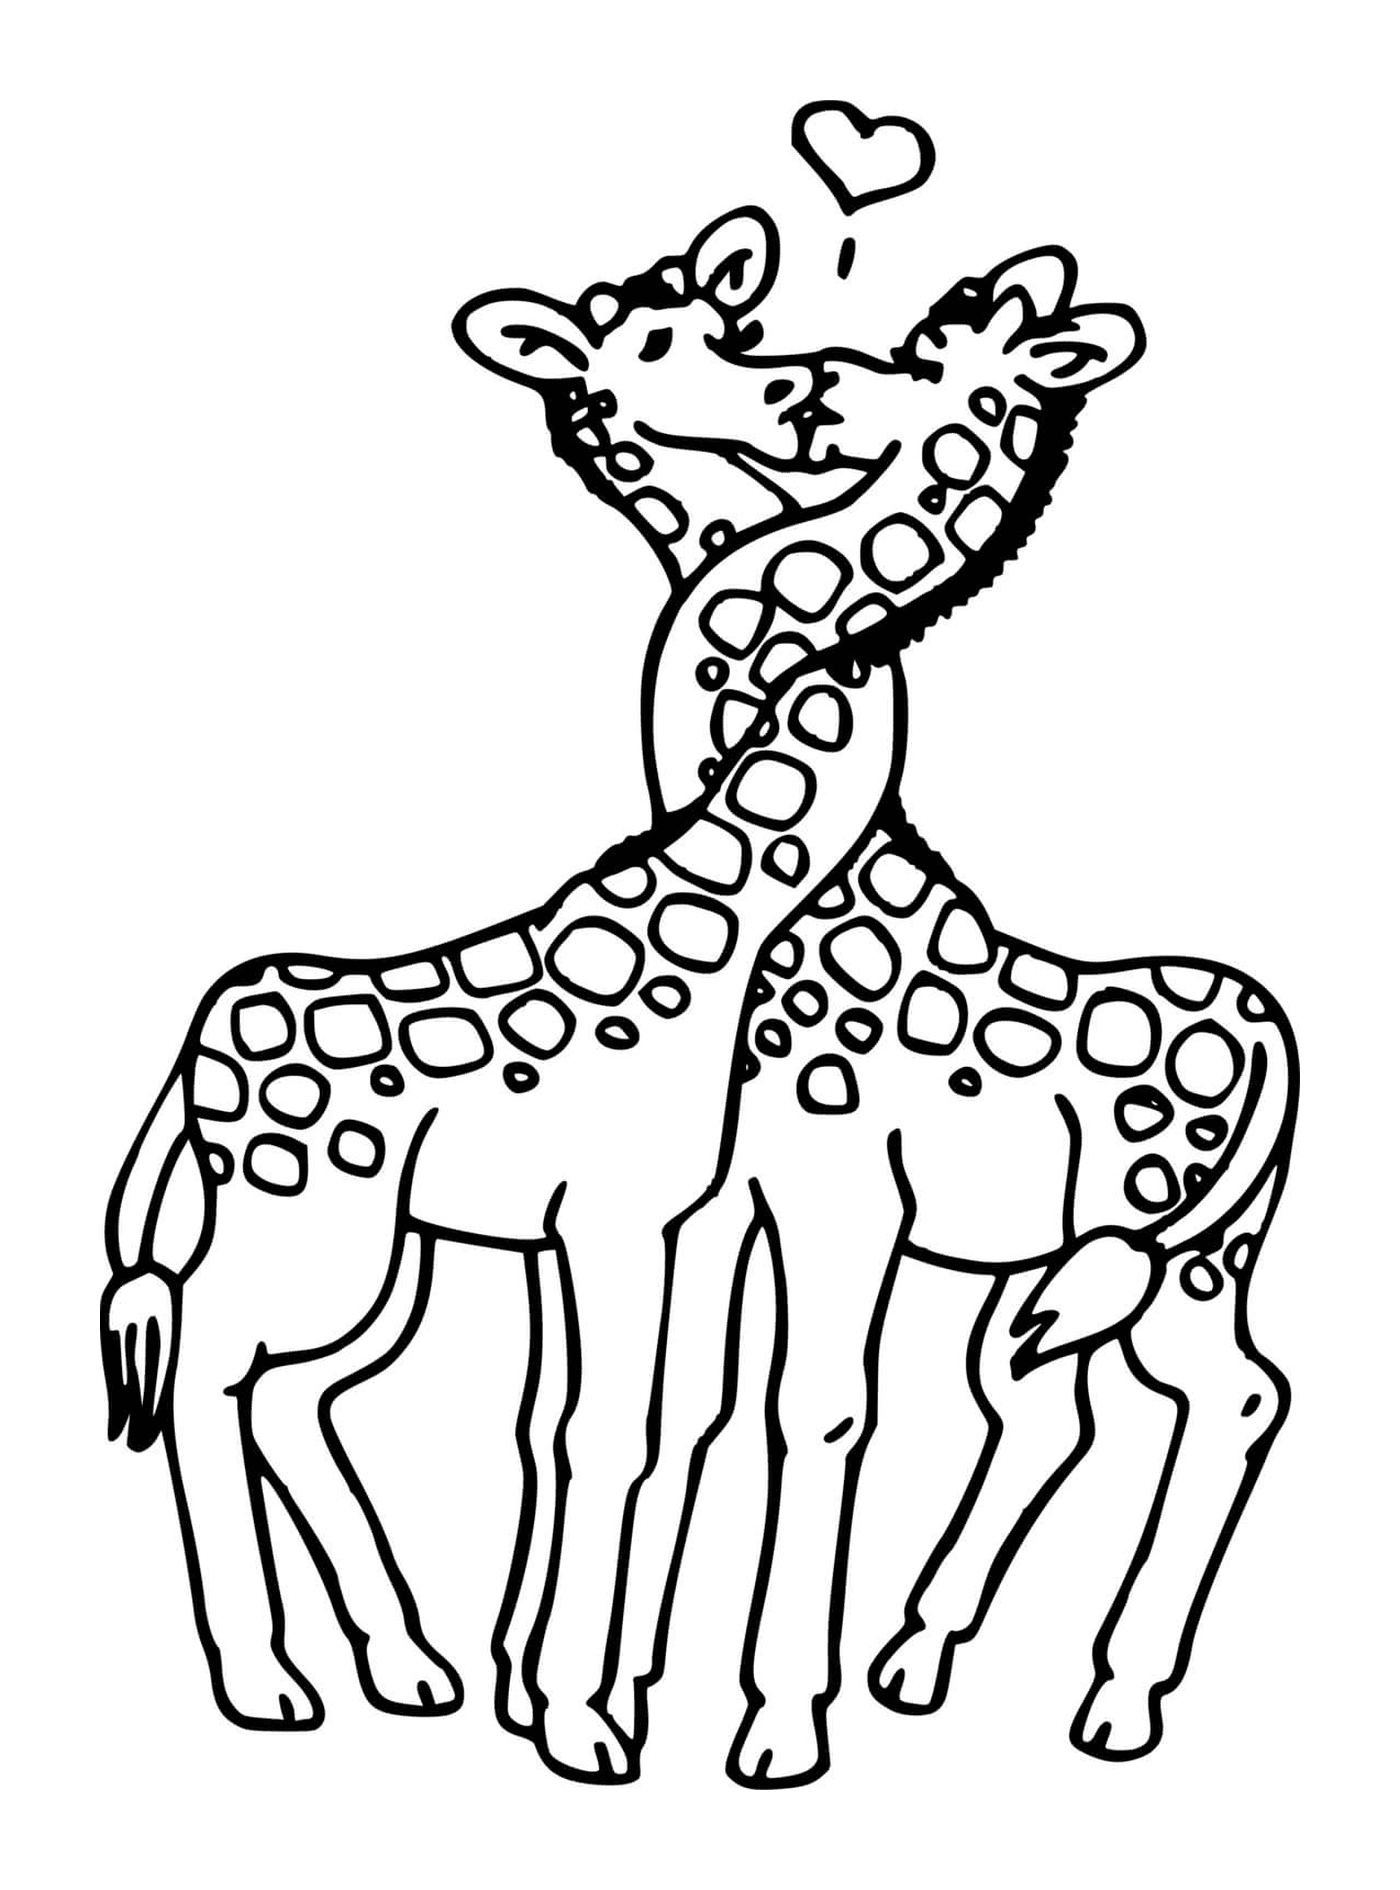  Duas girafas beijando 